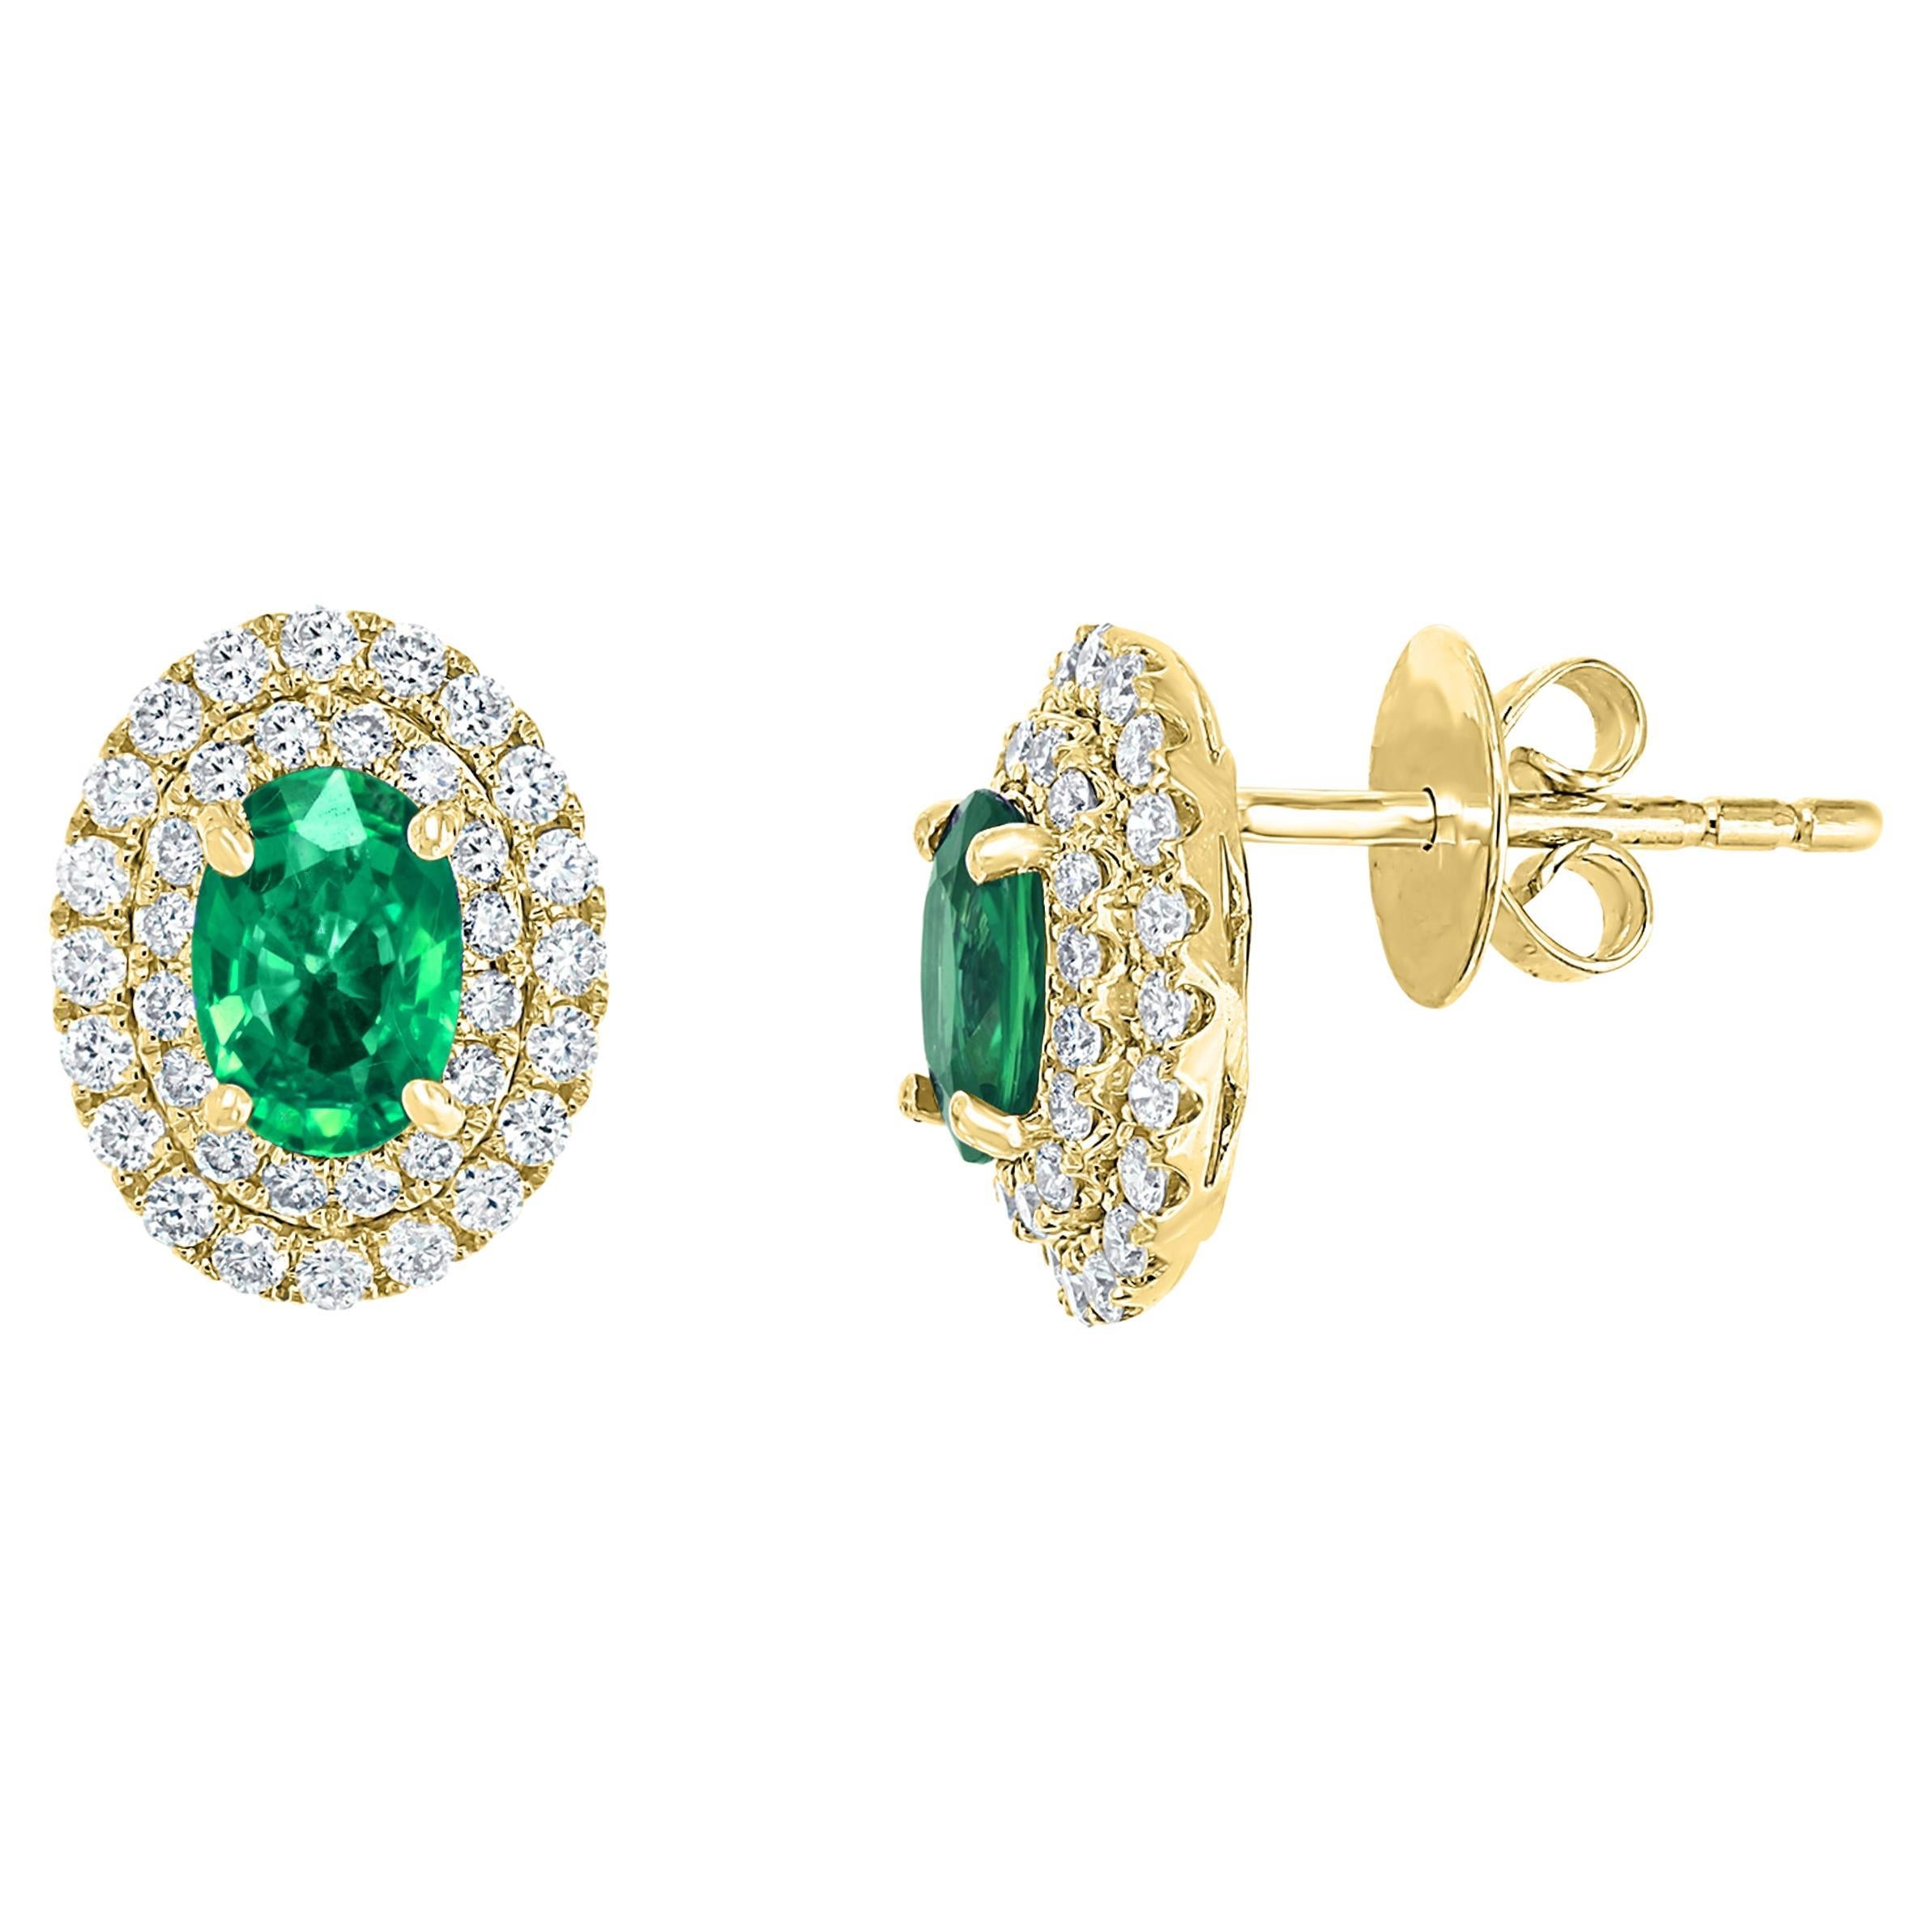 0.89 Carat Oval Cut Emerald and Diamond Stud Earrings in 18K Yellow Gold